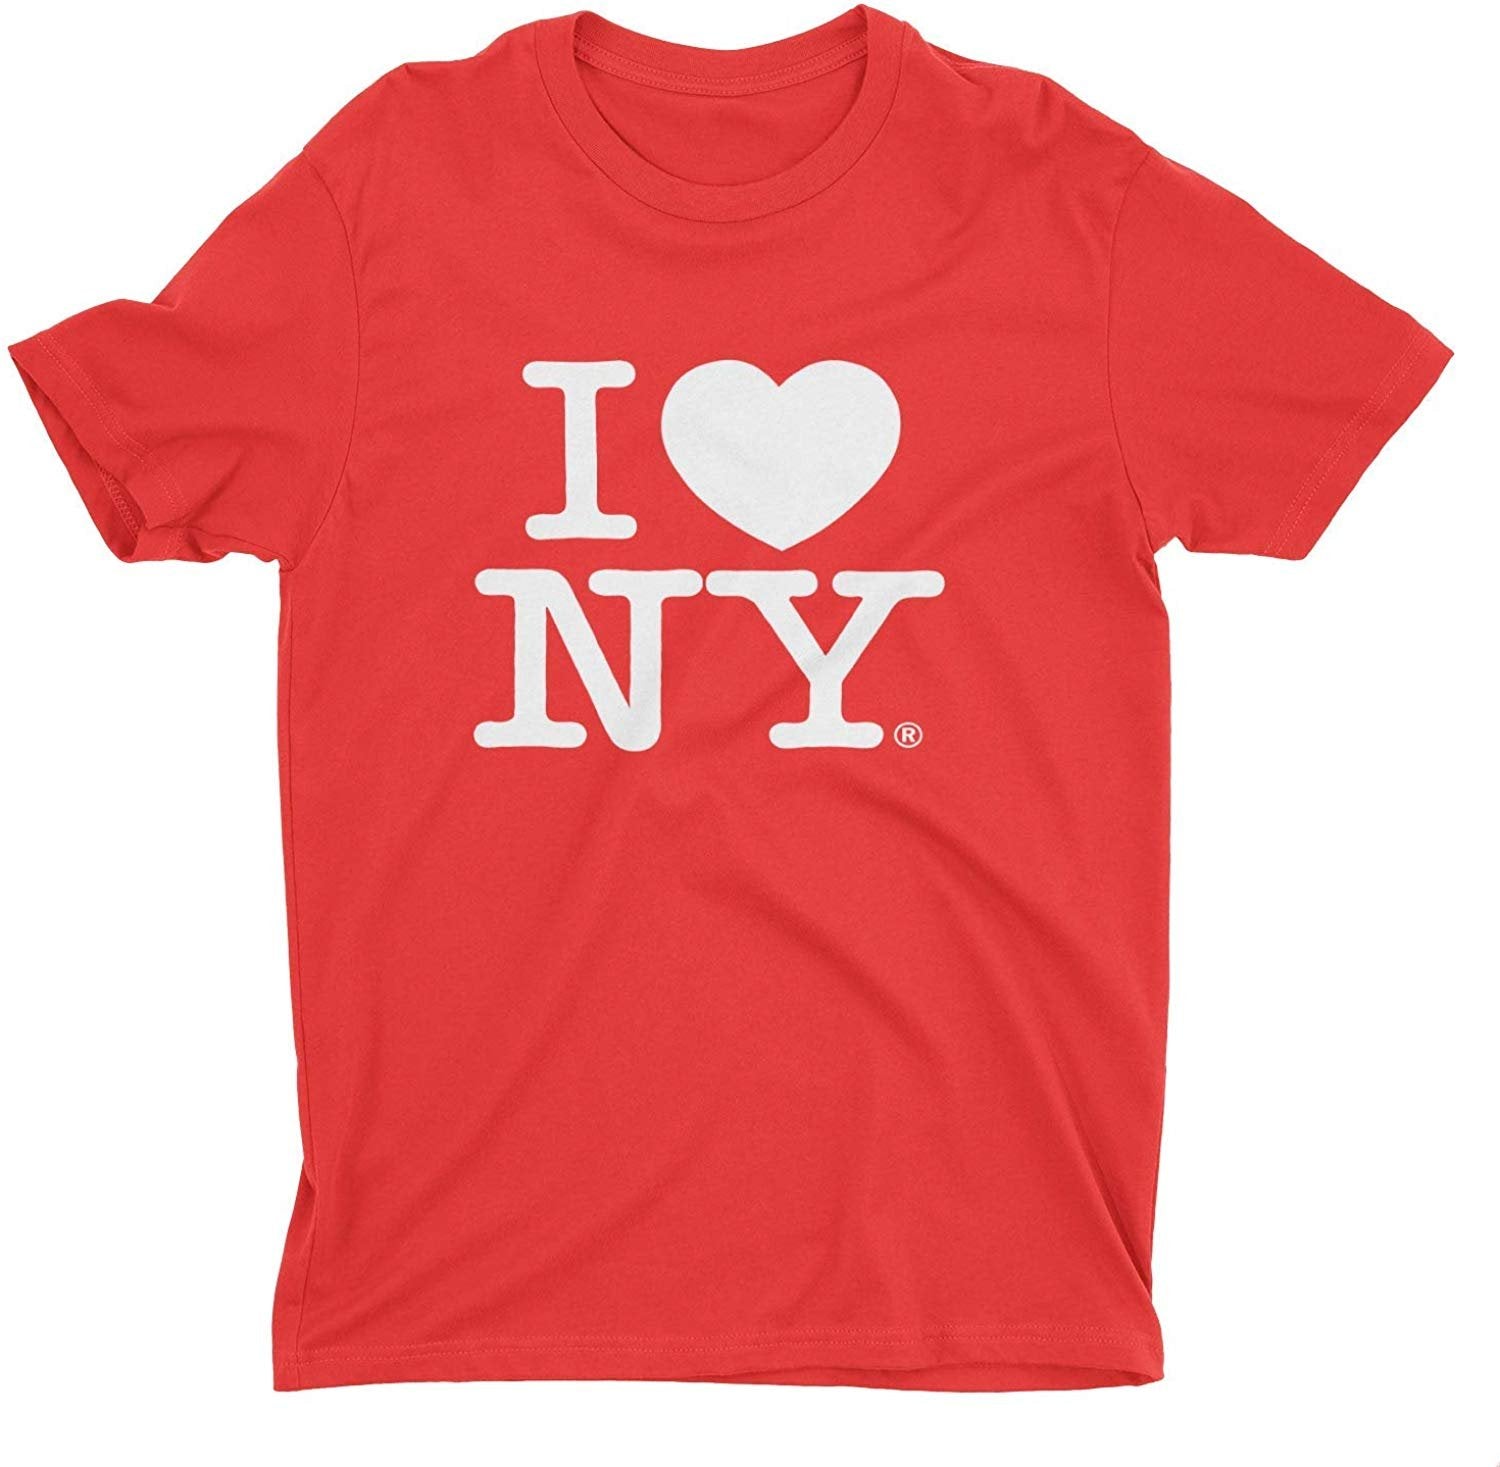 Ich liebe NY Kinder T-Shirt Rot